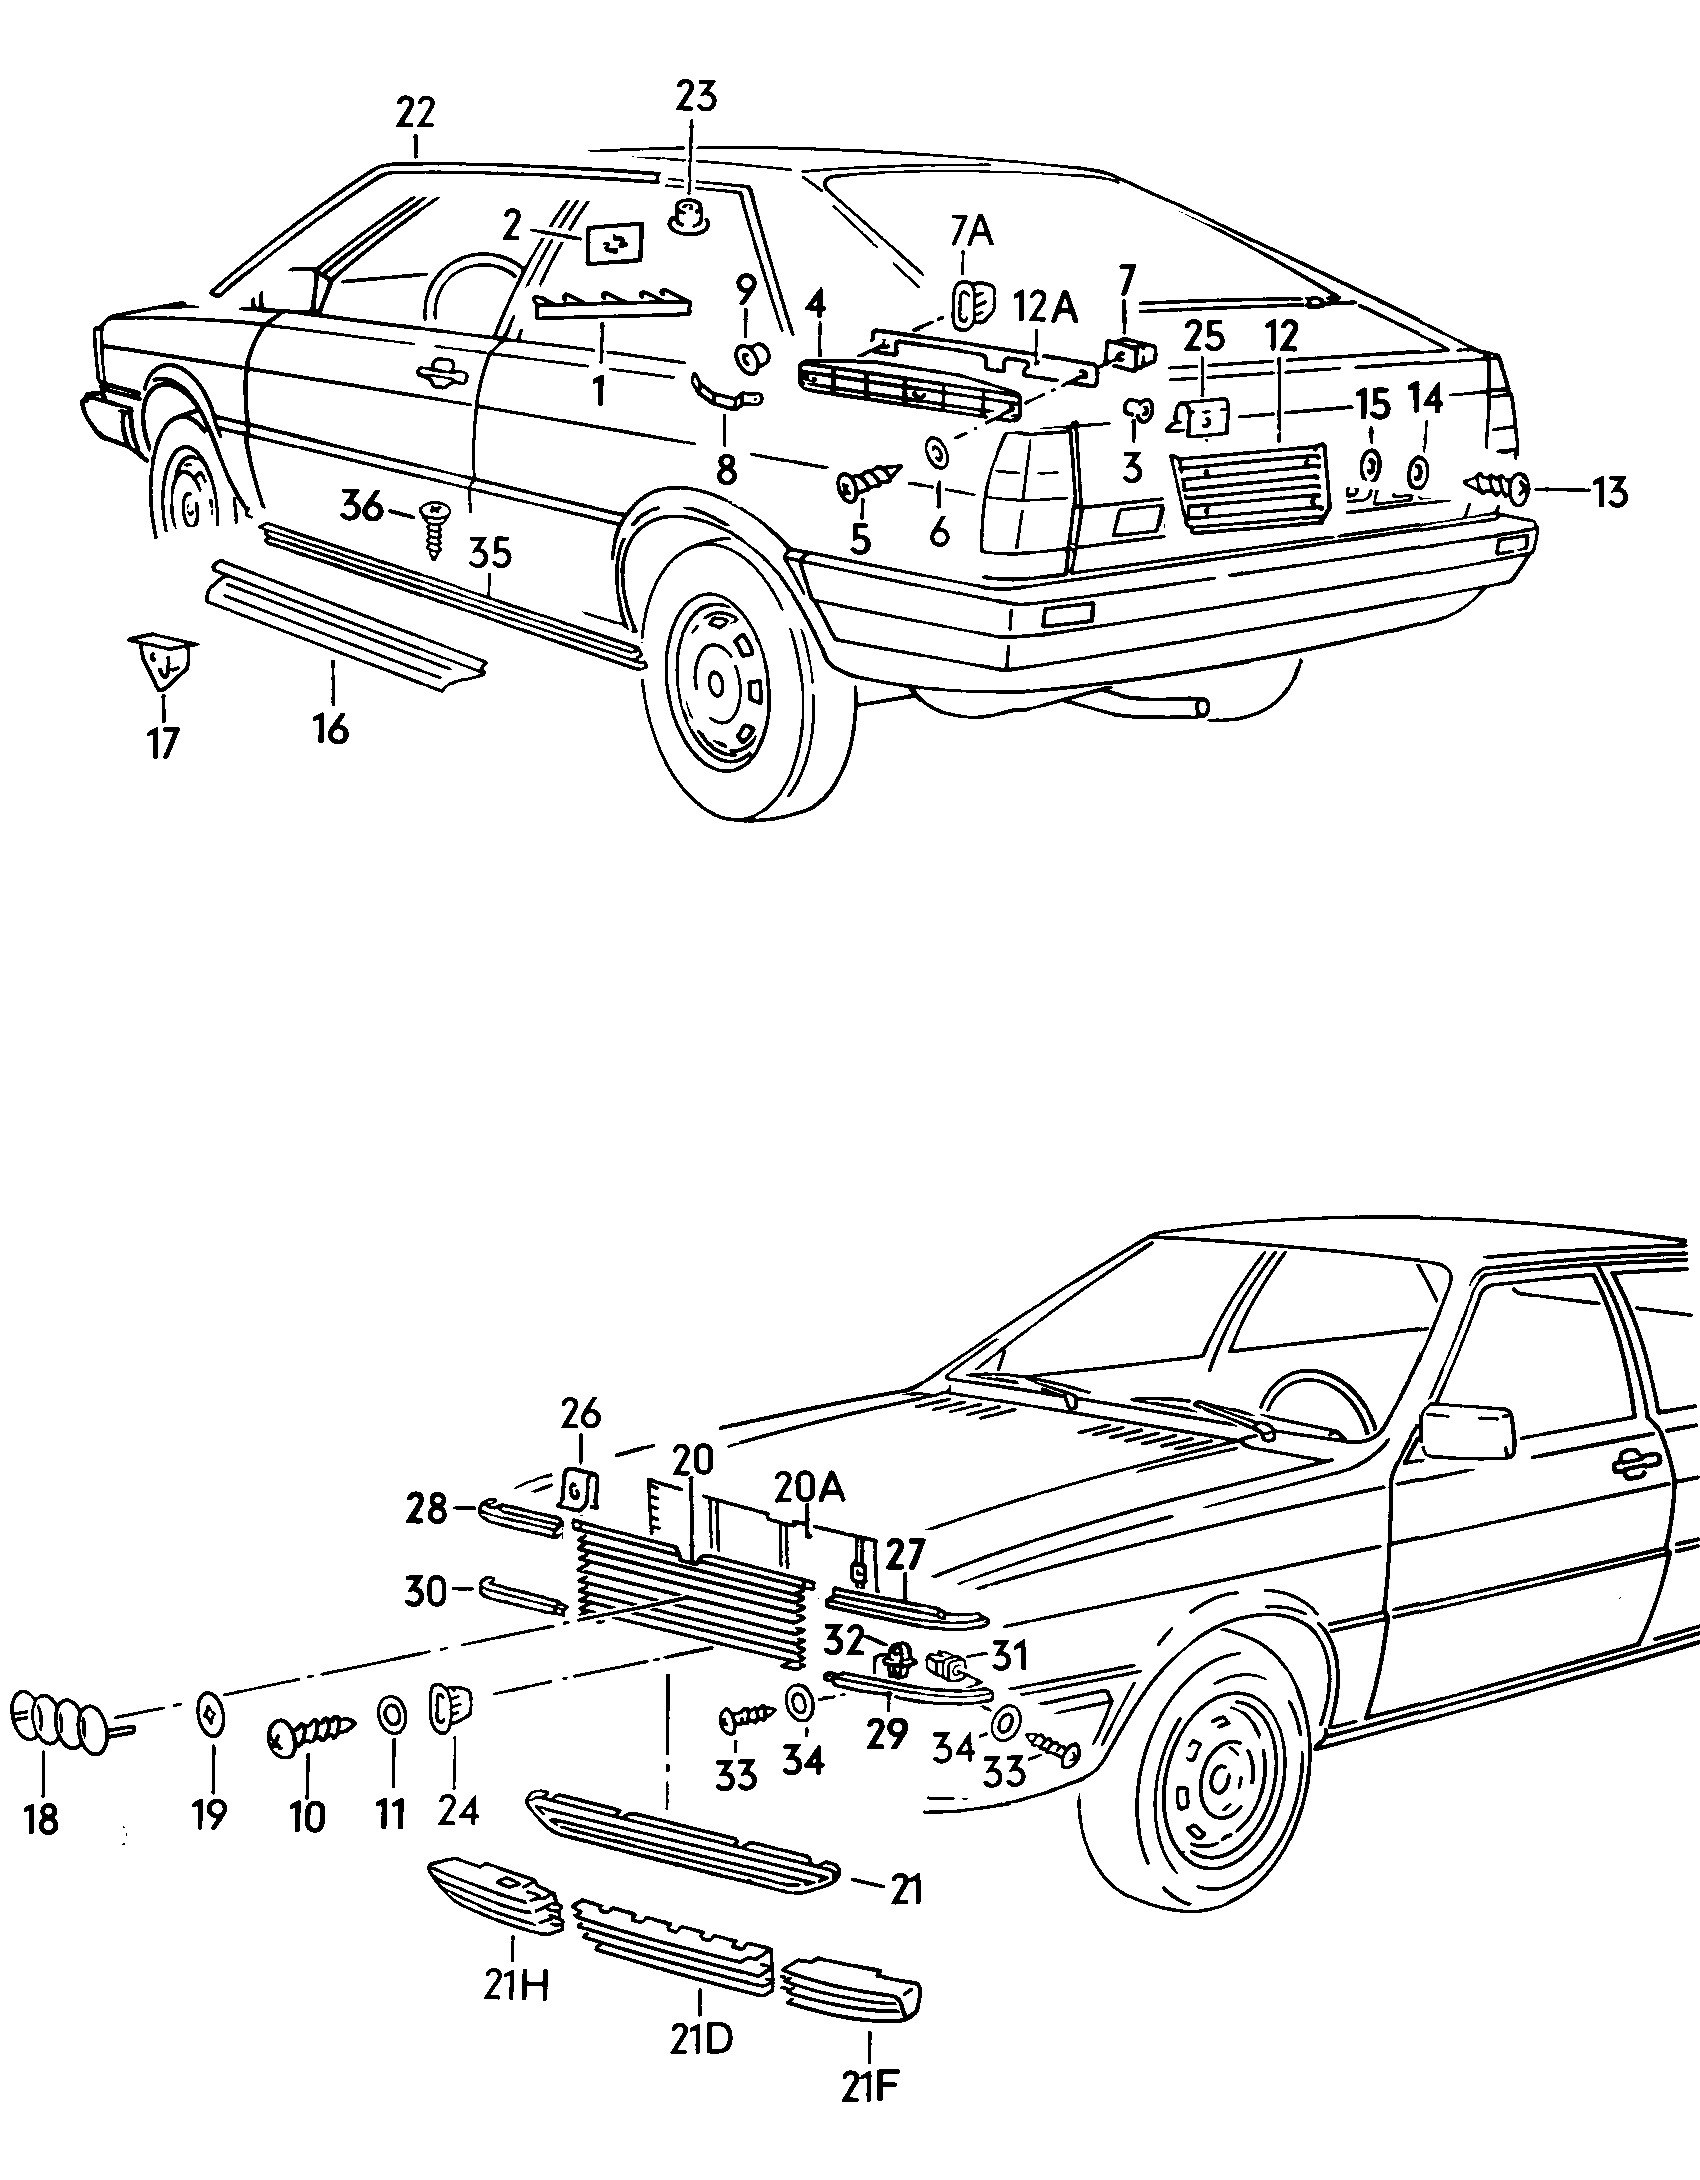 inscriptions/lettering - Audi Coupe(ACO)  